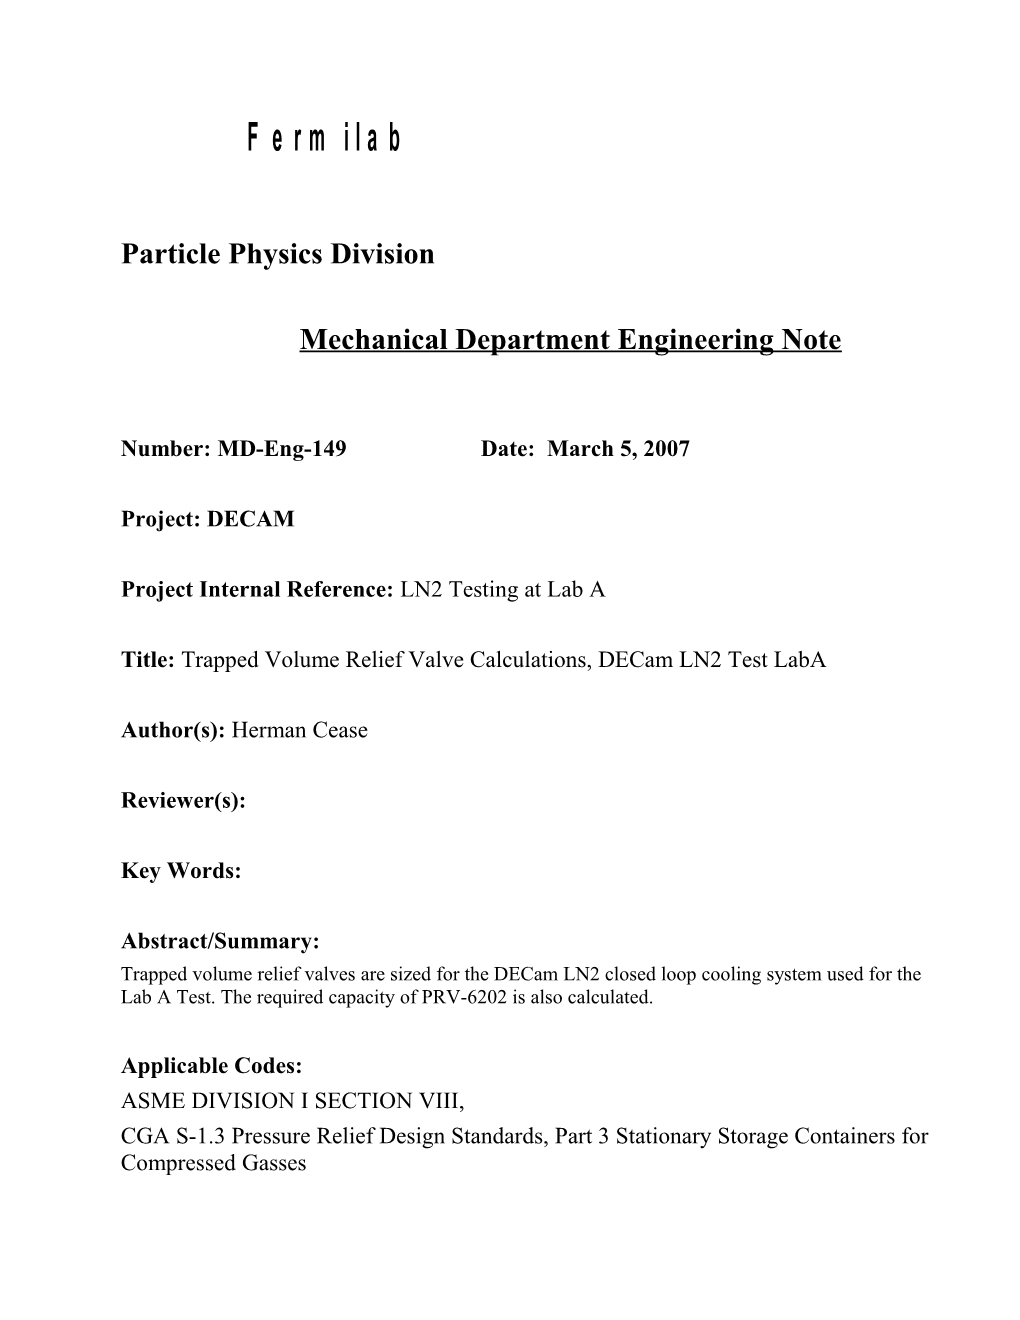 Mechanical Department Engineering Note